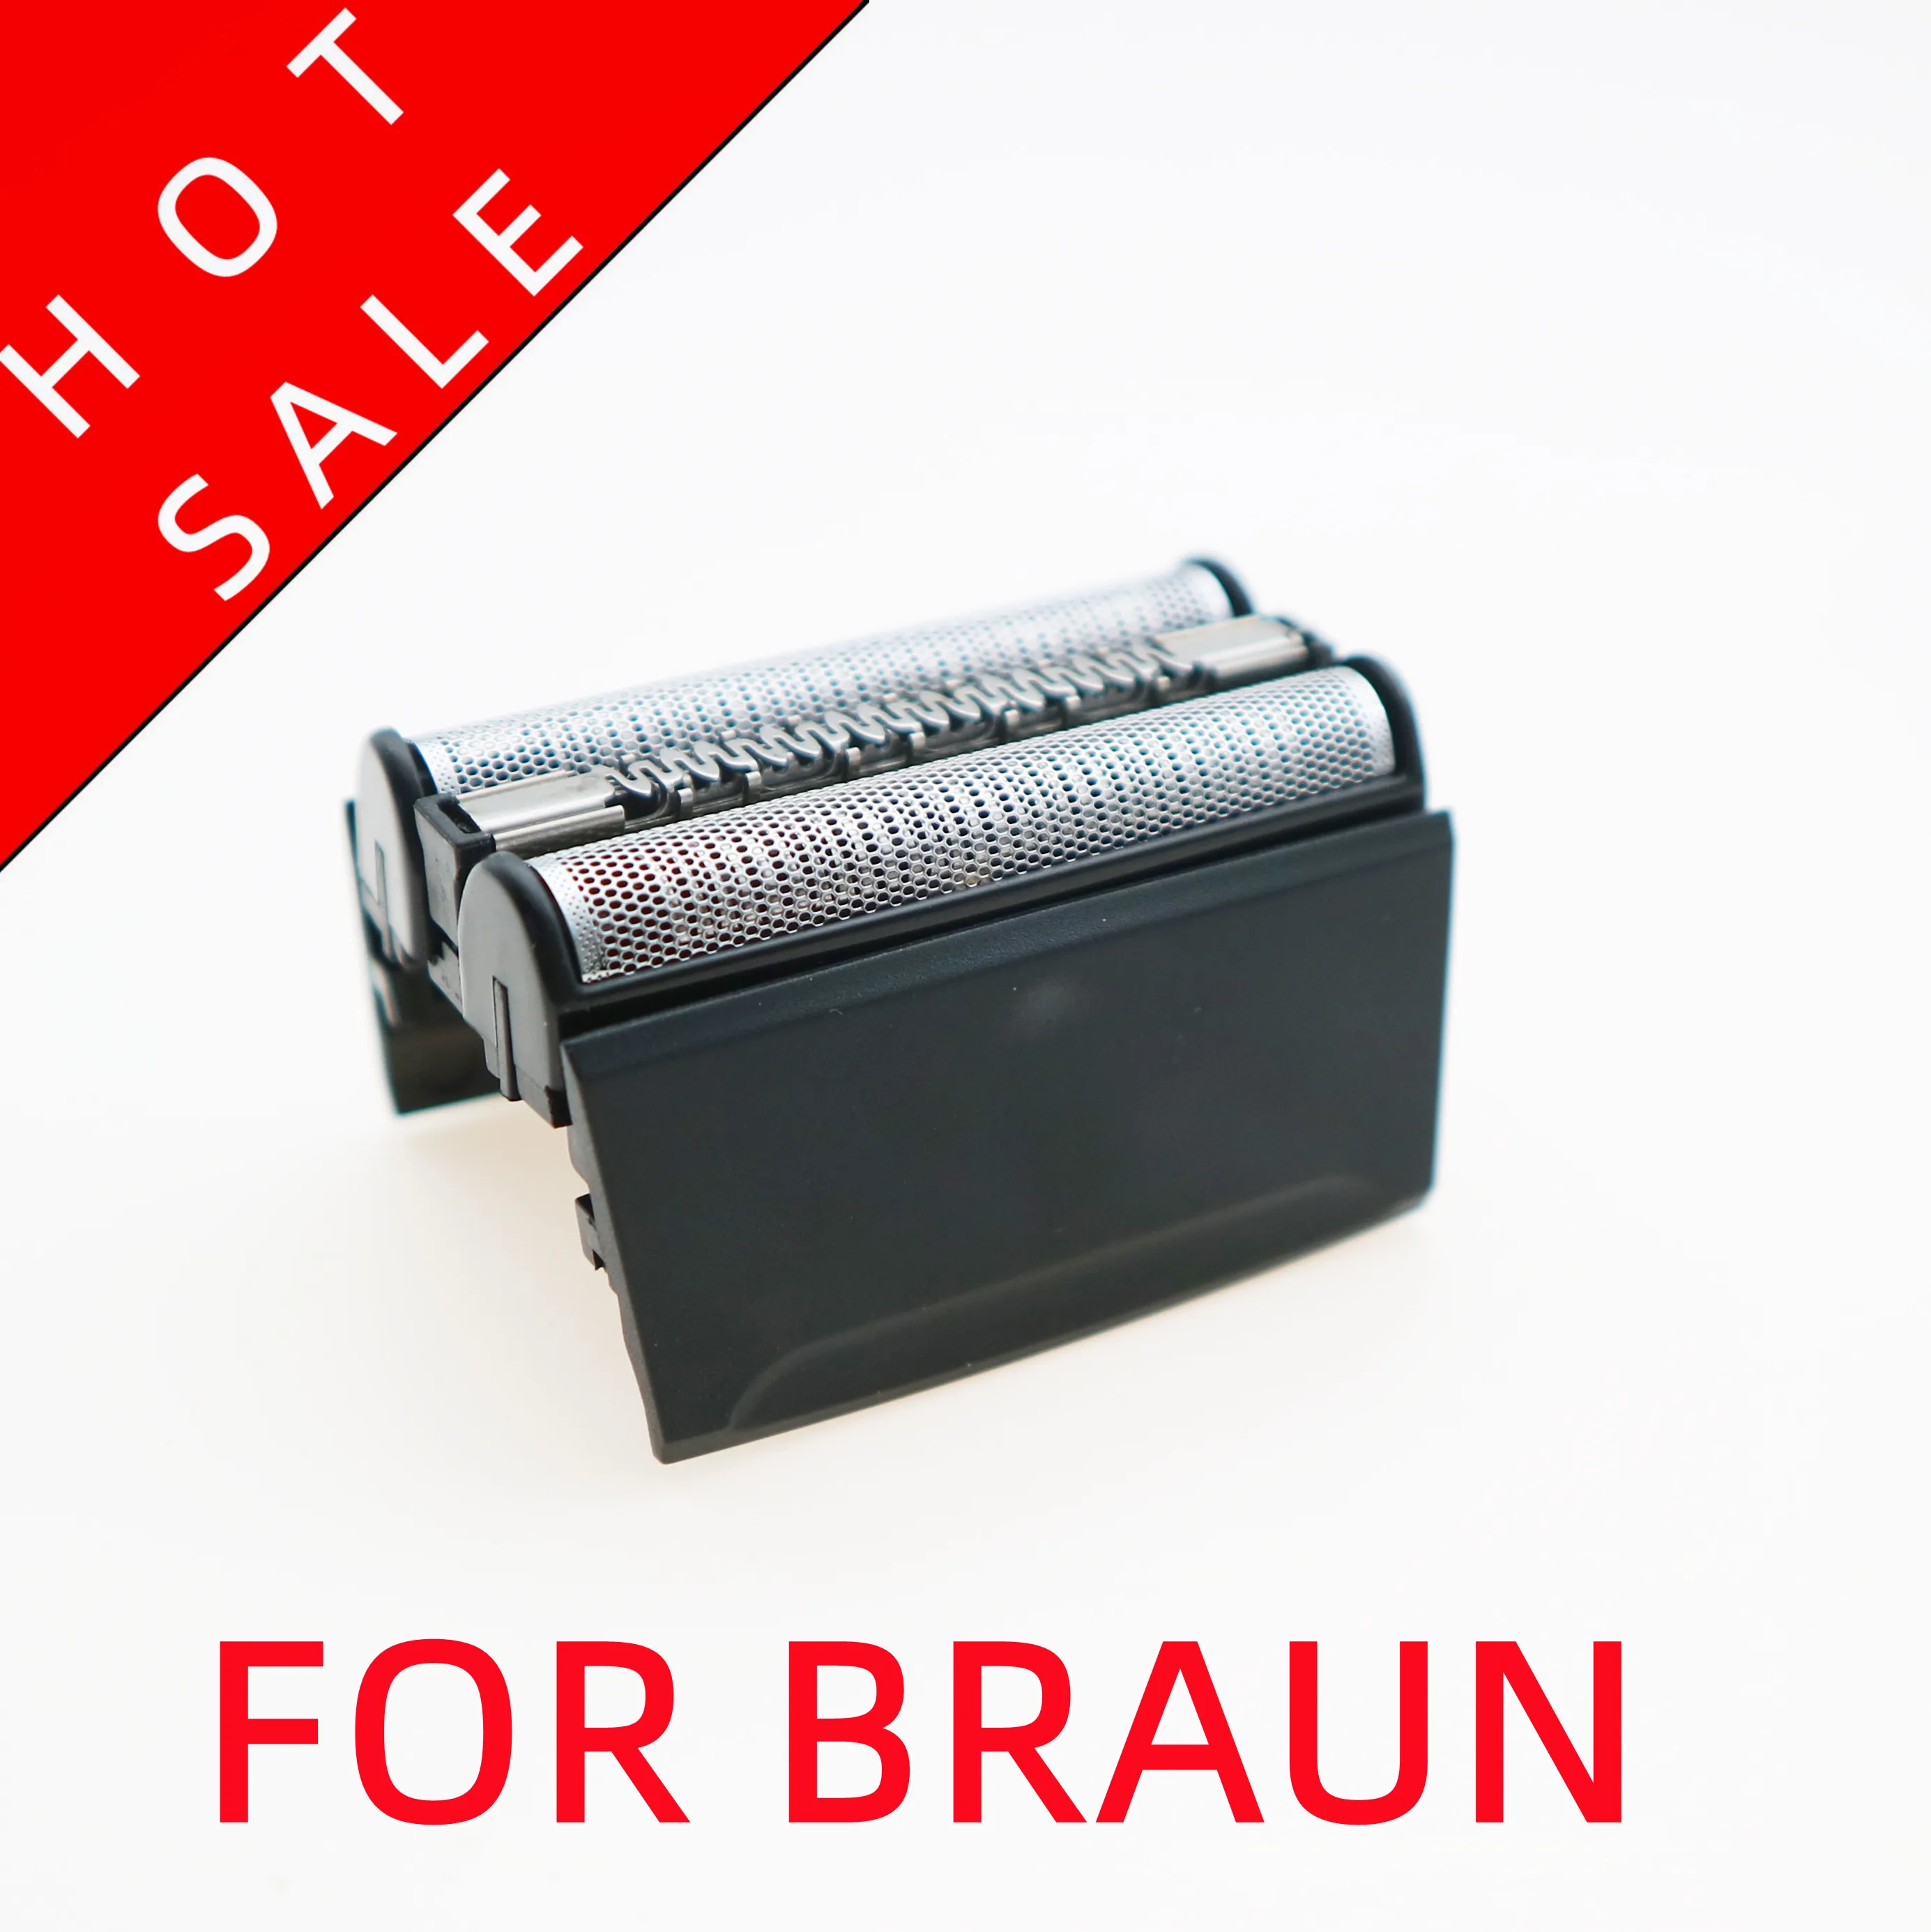 Replacement Shaver Heads & Foil Heads 52B for Braun 5 Series 5020S 5030S 5040S 5050S 5050cc 5070cc 5090cc сменная фотофольга и лезвие для braun 52b 52s 5 series 5030s